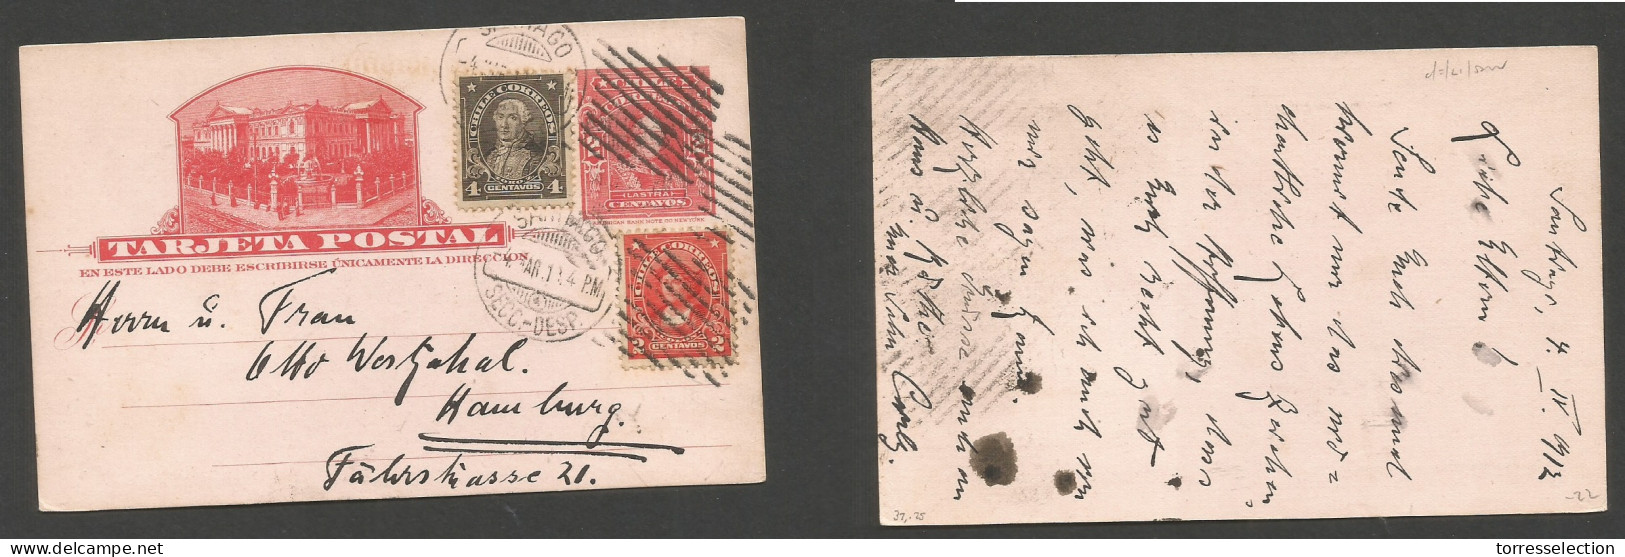 CHILE - Stationery. 1912 (12 Apr) Stgo - Germany, Hamburg. 2c Red Illustr Stat Card + 2 Adtls At 8c Rate. Fine Used. - Chili